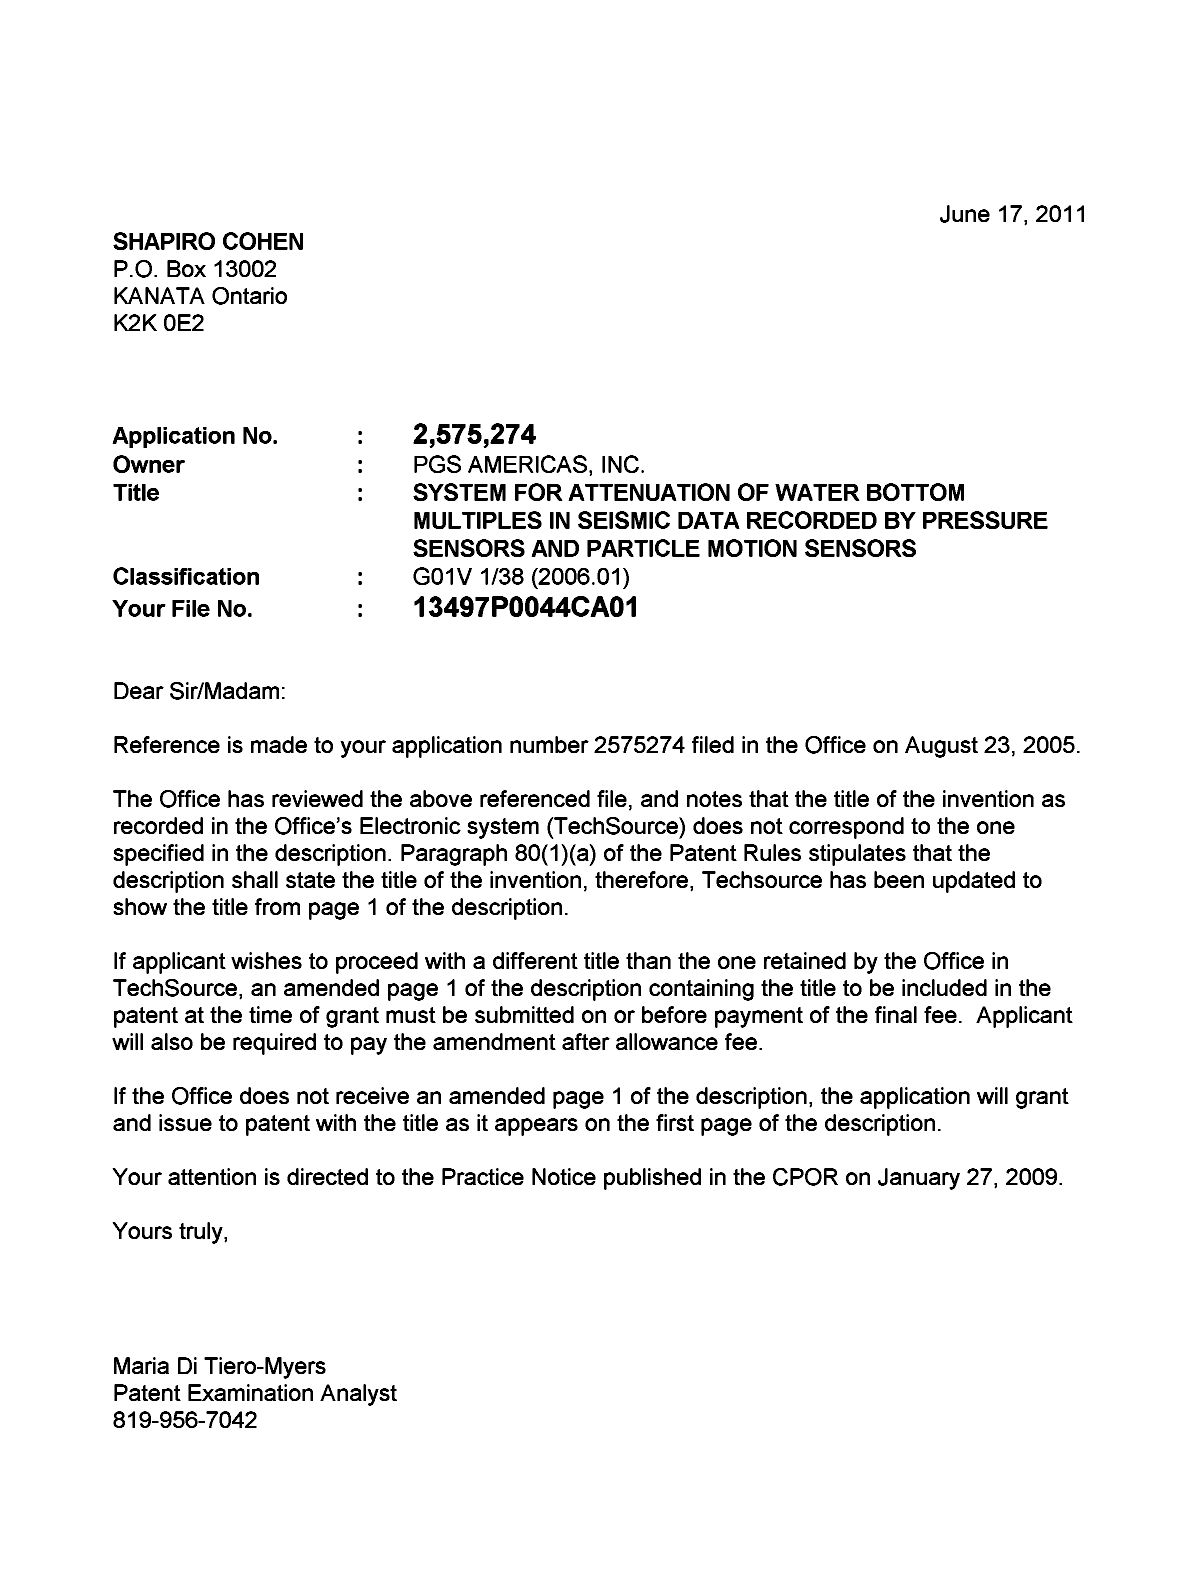 Canadian Patent Document 2575274. Correspondence 20110617. Image 1 of 1